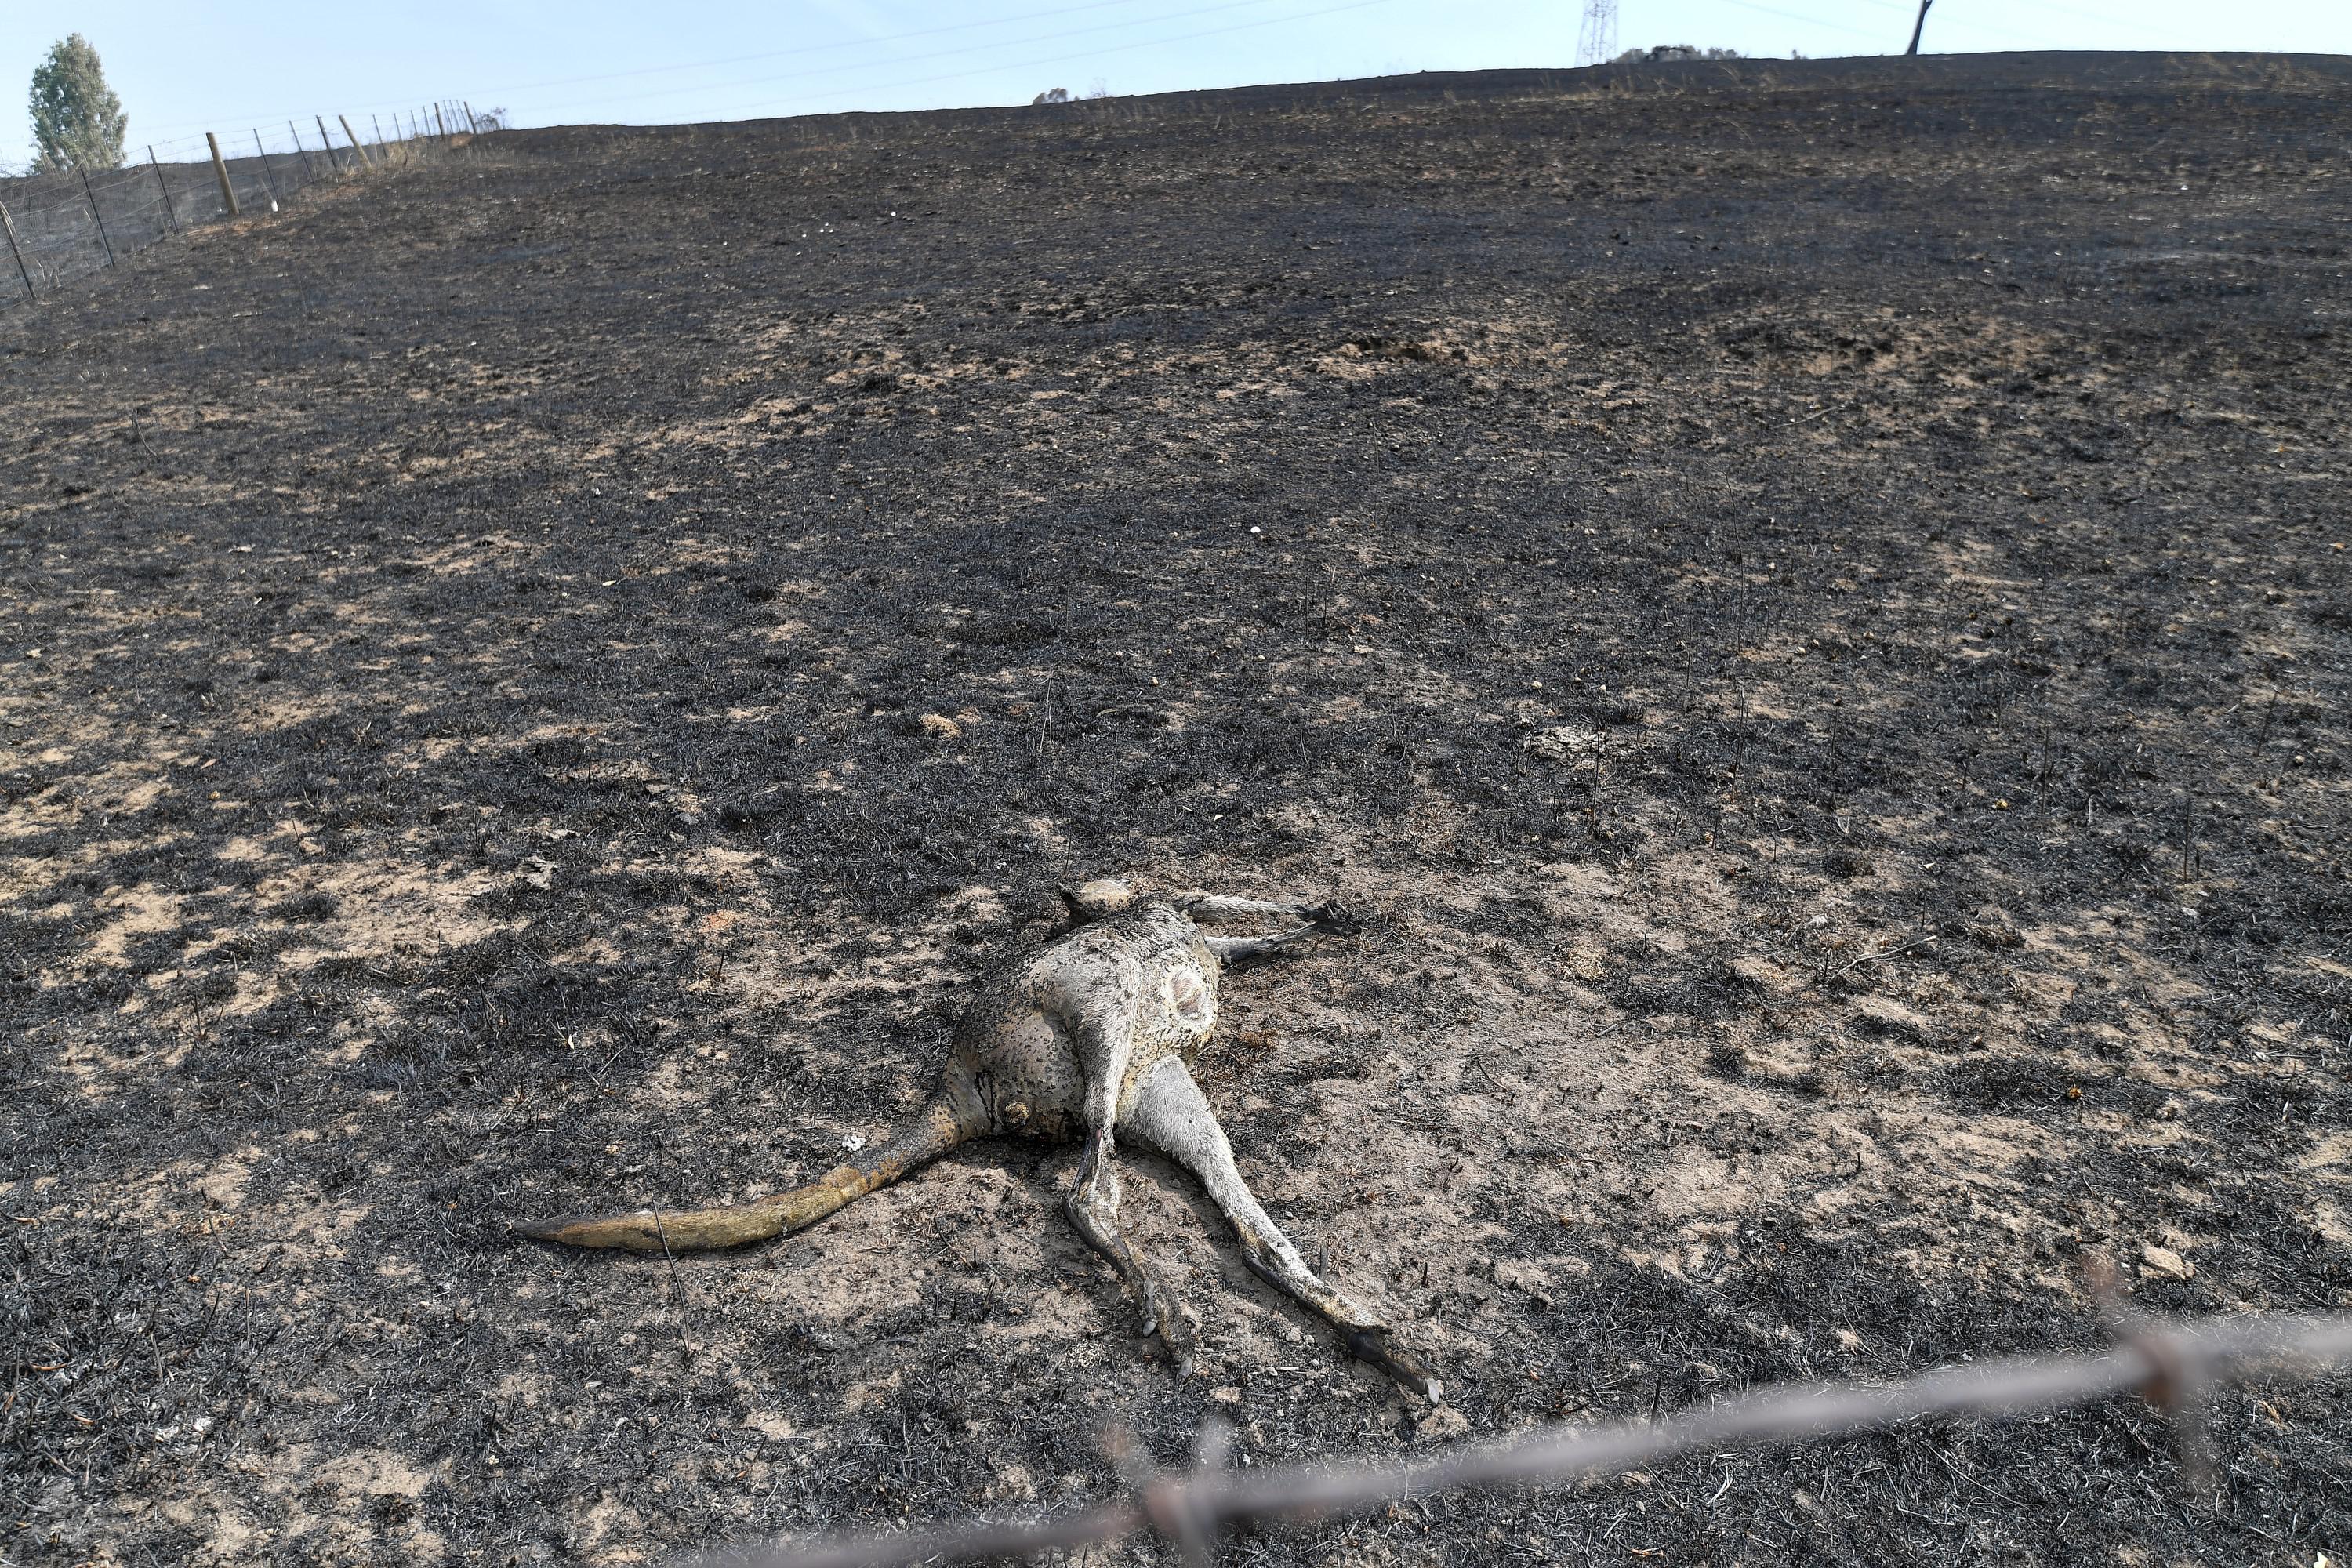 A dead kangaroo is seen on a charred landscape.